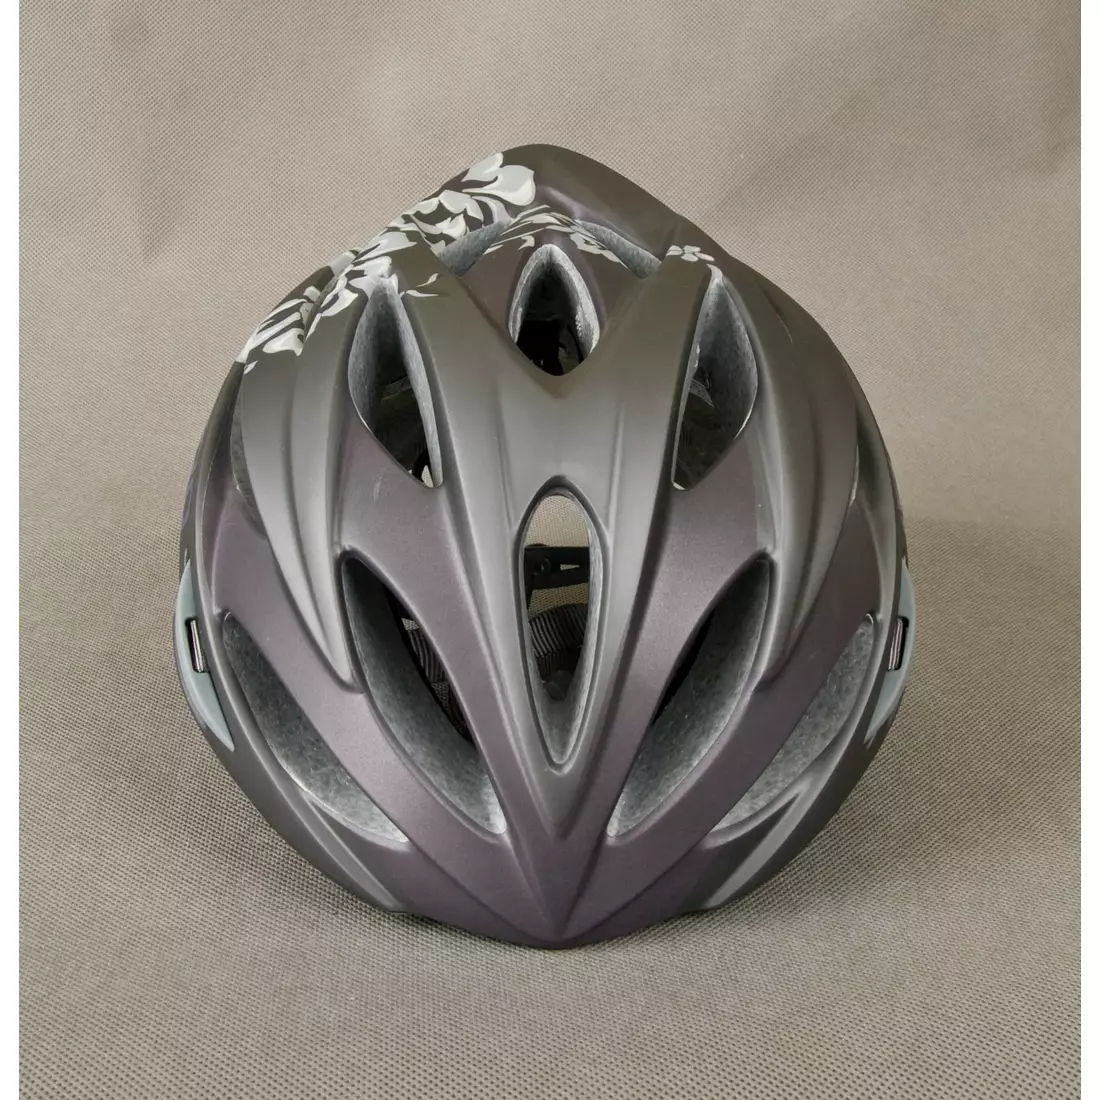 GIRO SONNET titanium women's bicycle helmet